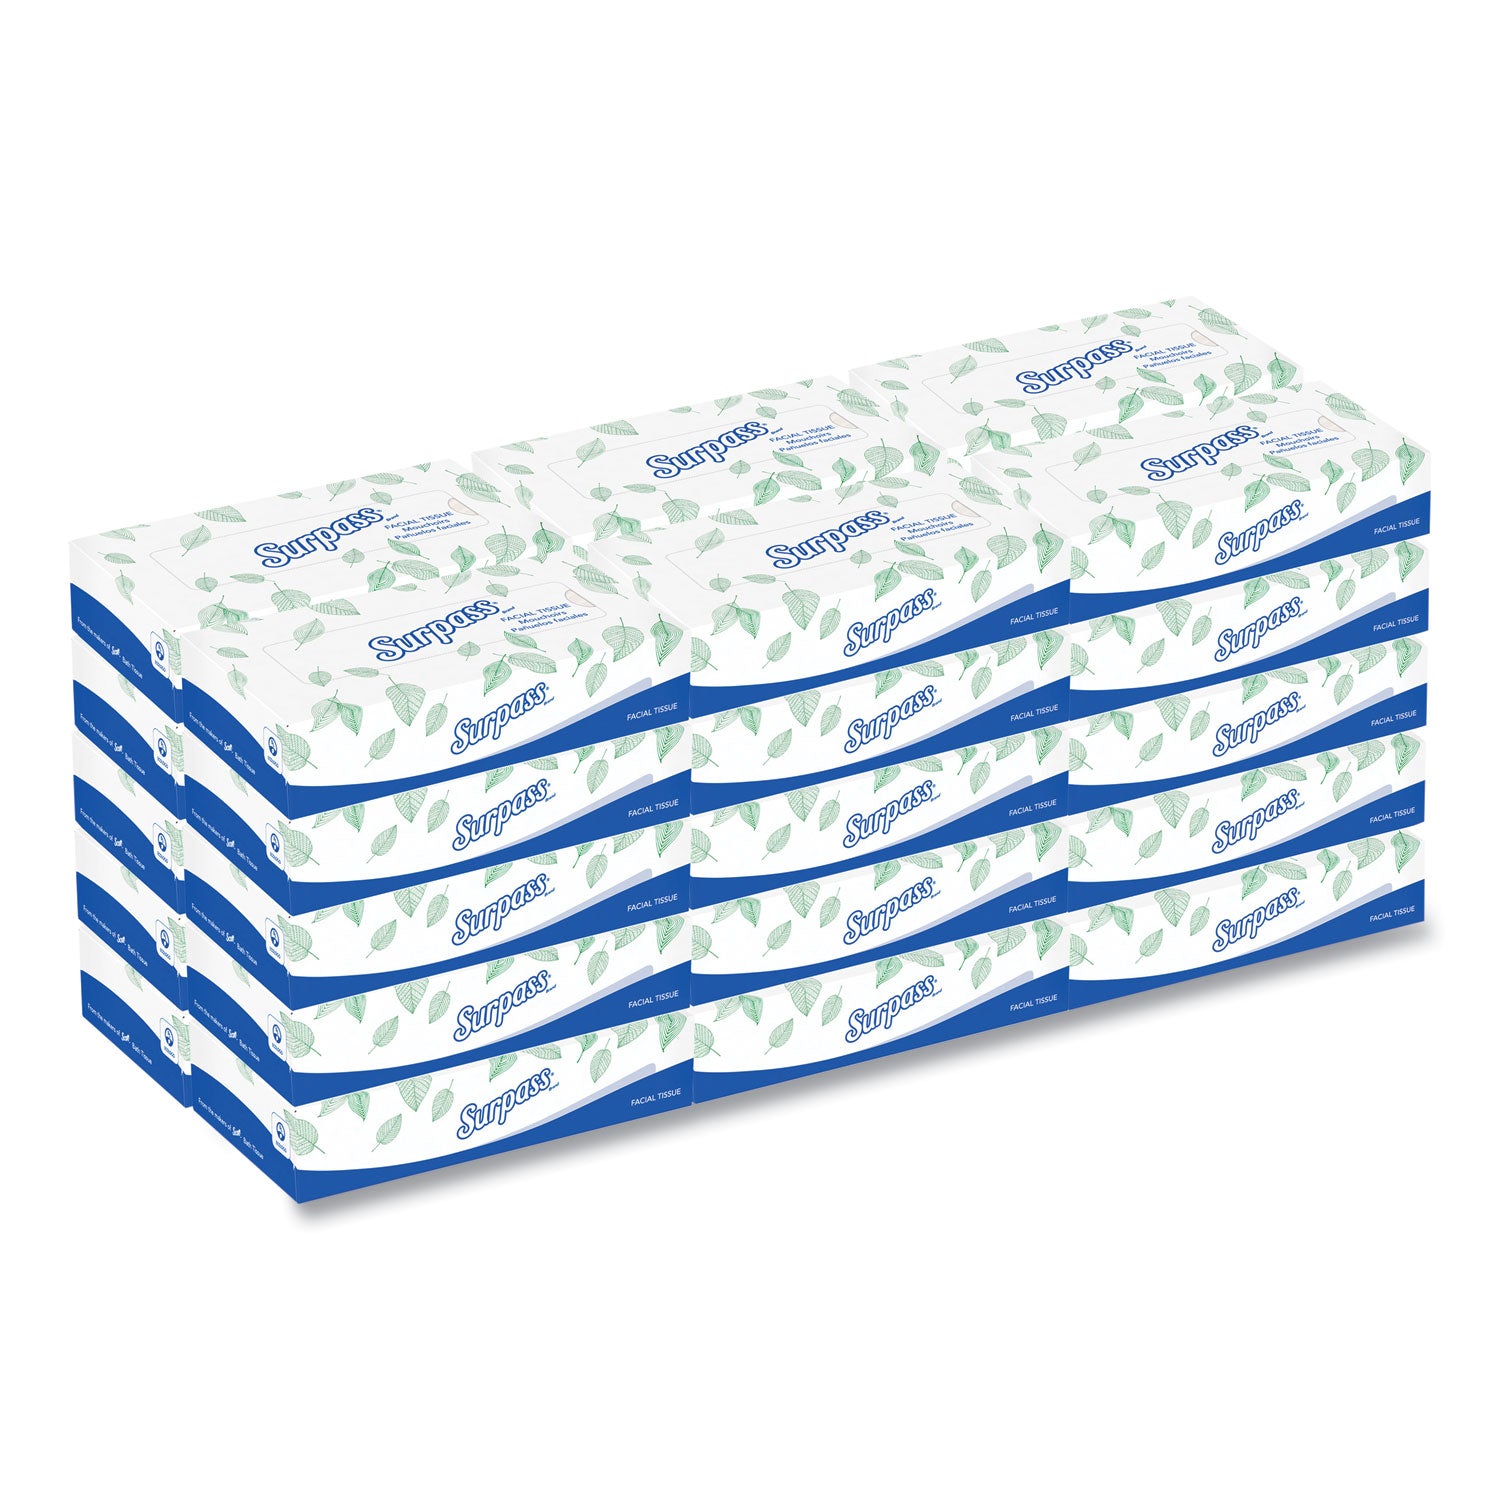 Facial Tissue for Business, 2-Ply, White, Flat Box, 100 Sheets/Box, 30 Boxes/Carton - 1